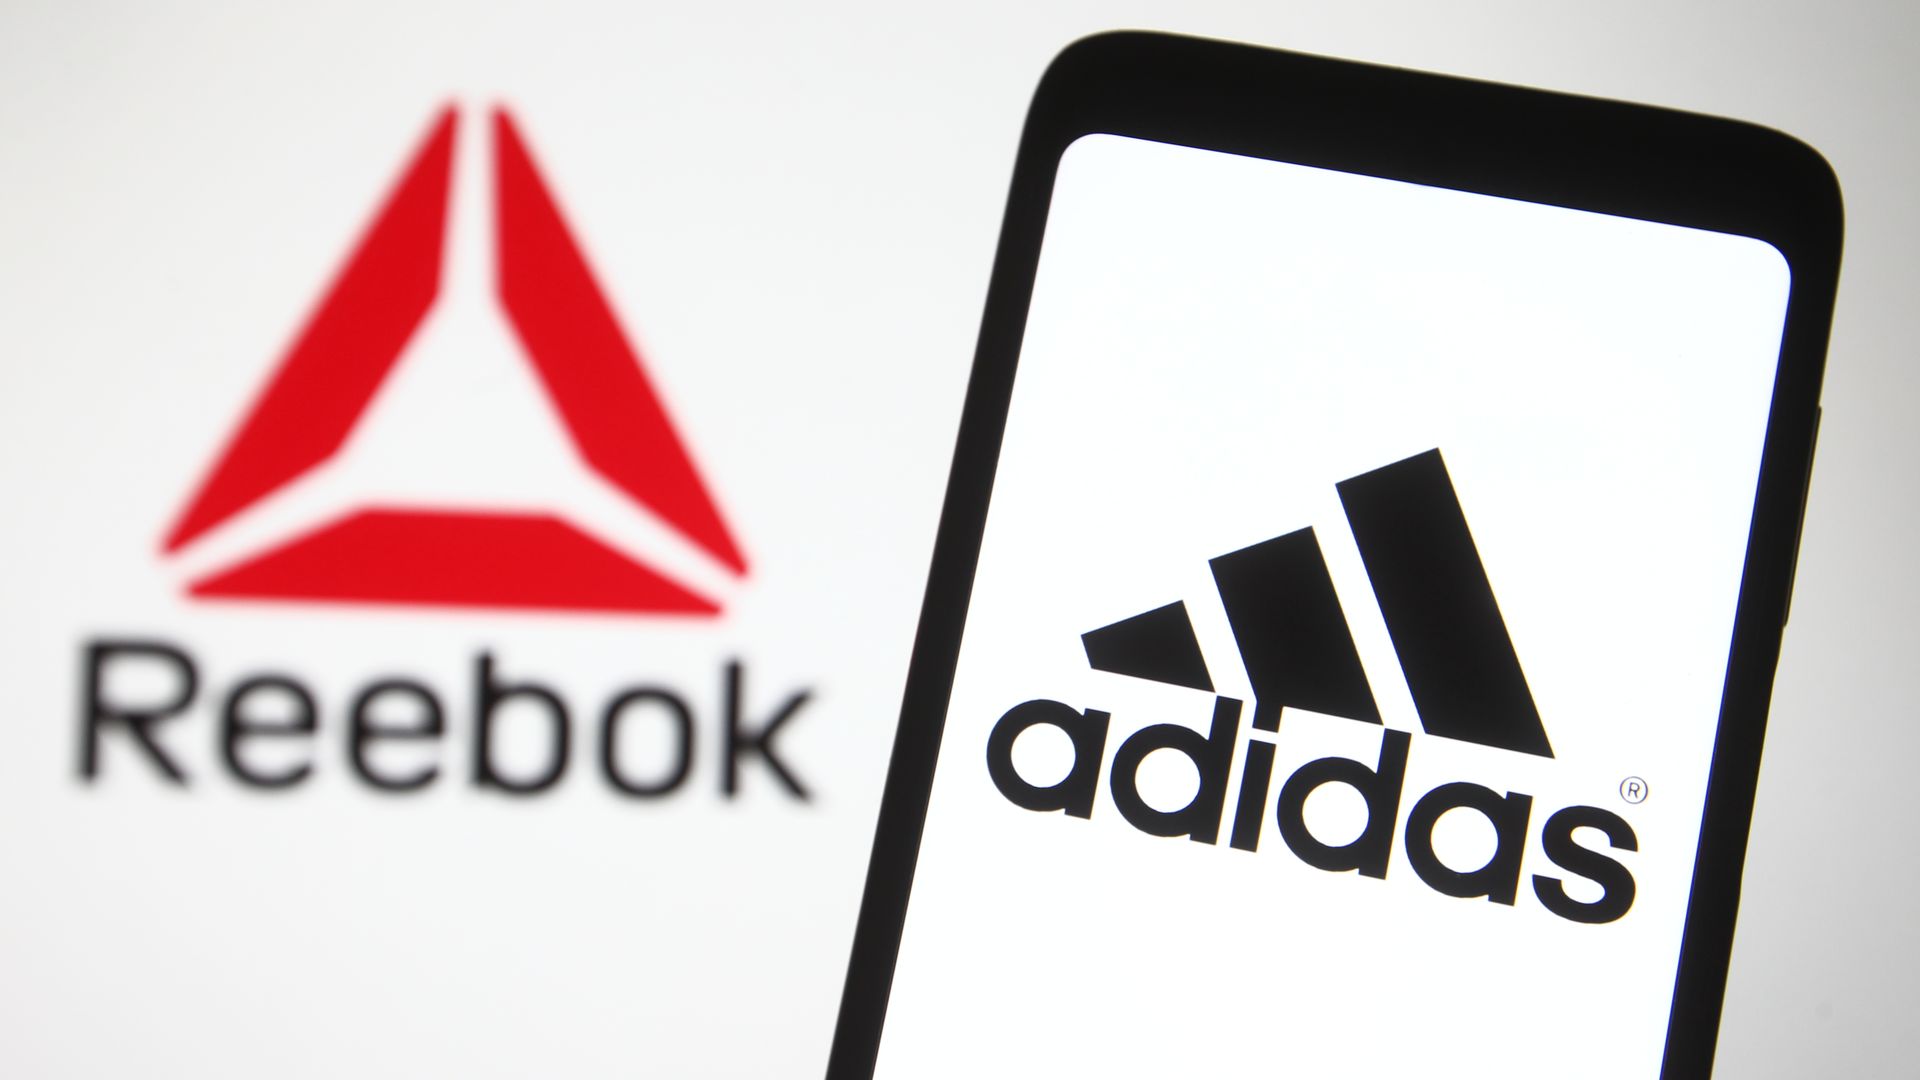 Reebok and Adidas logos